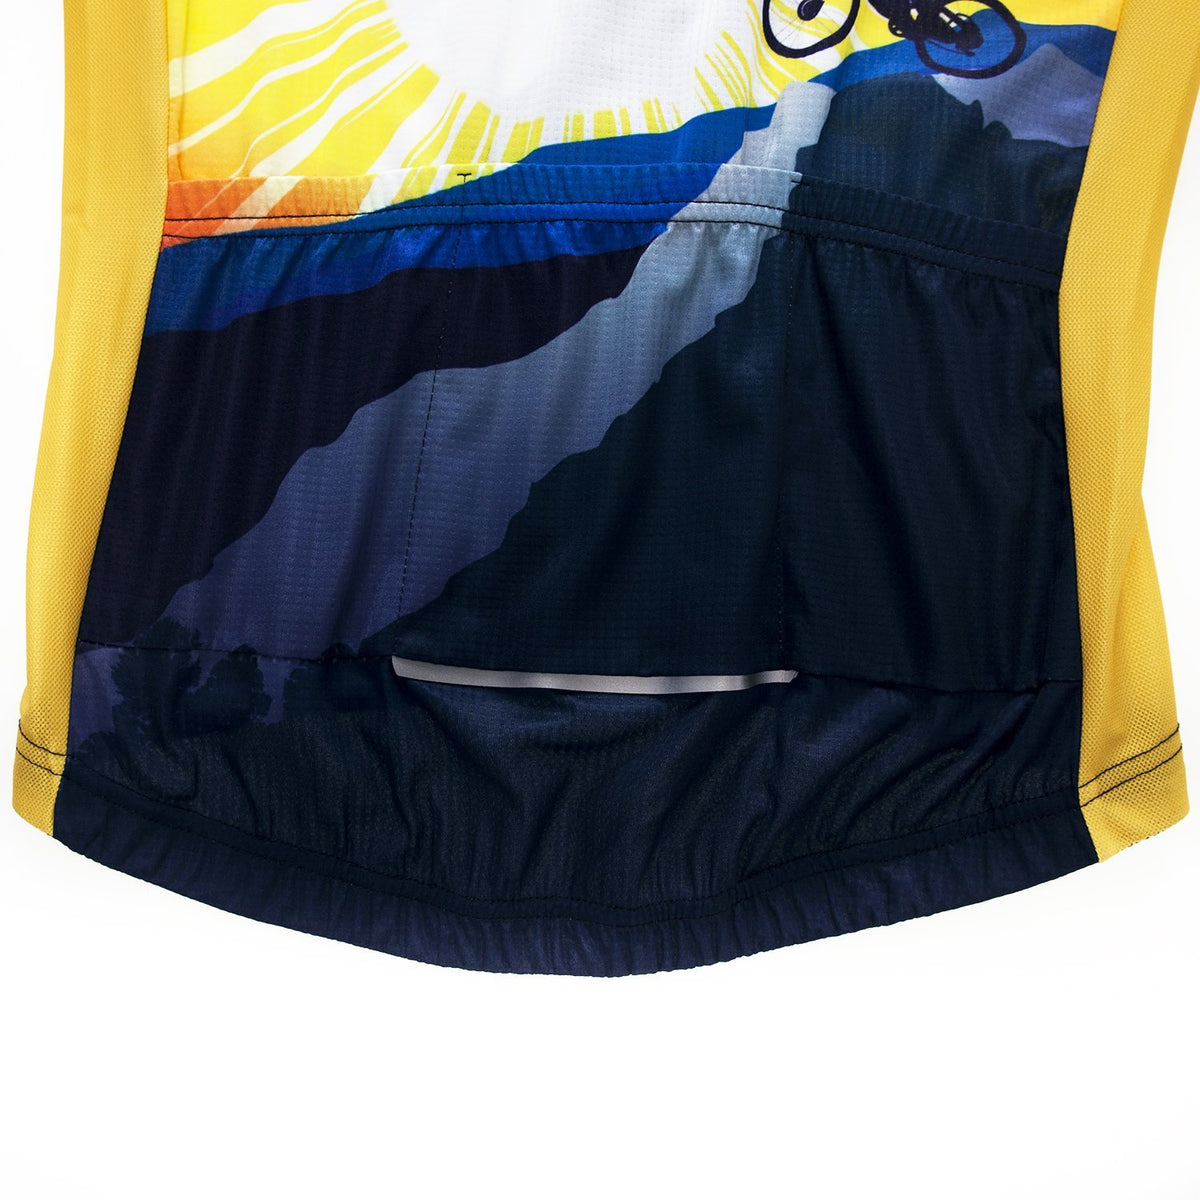 Yellow Rider| Men's Long Sleeve Cycling Set